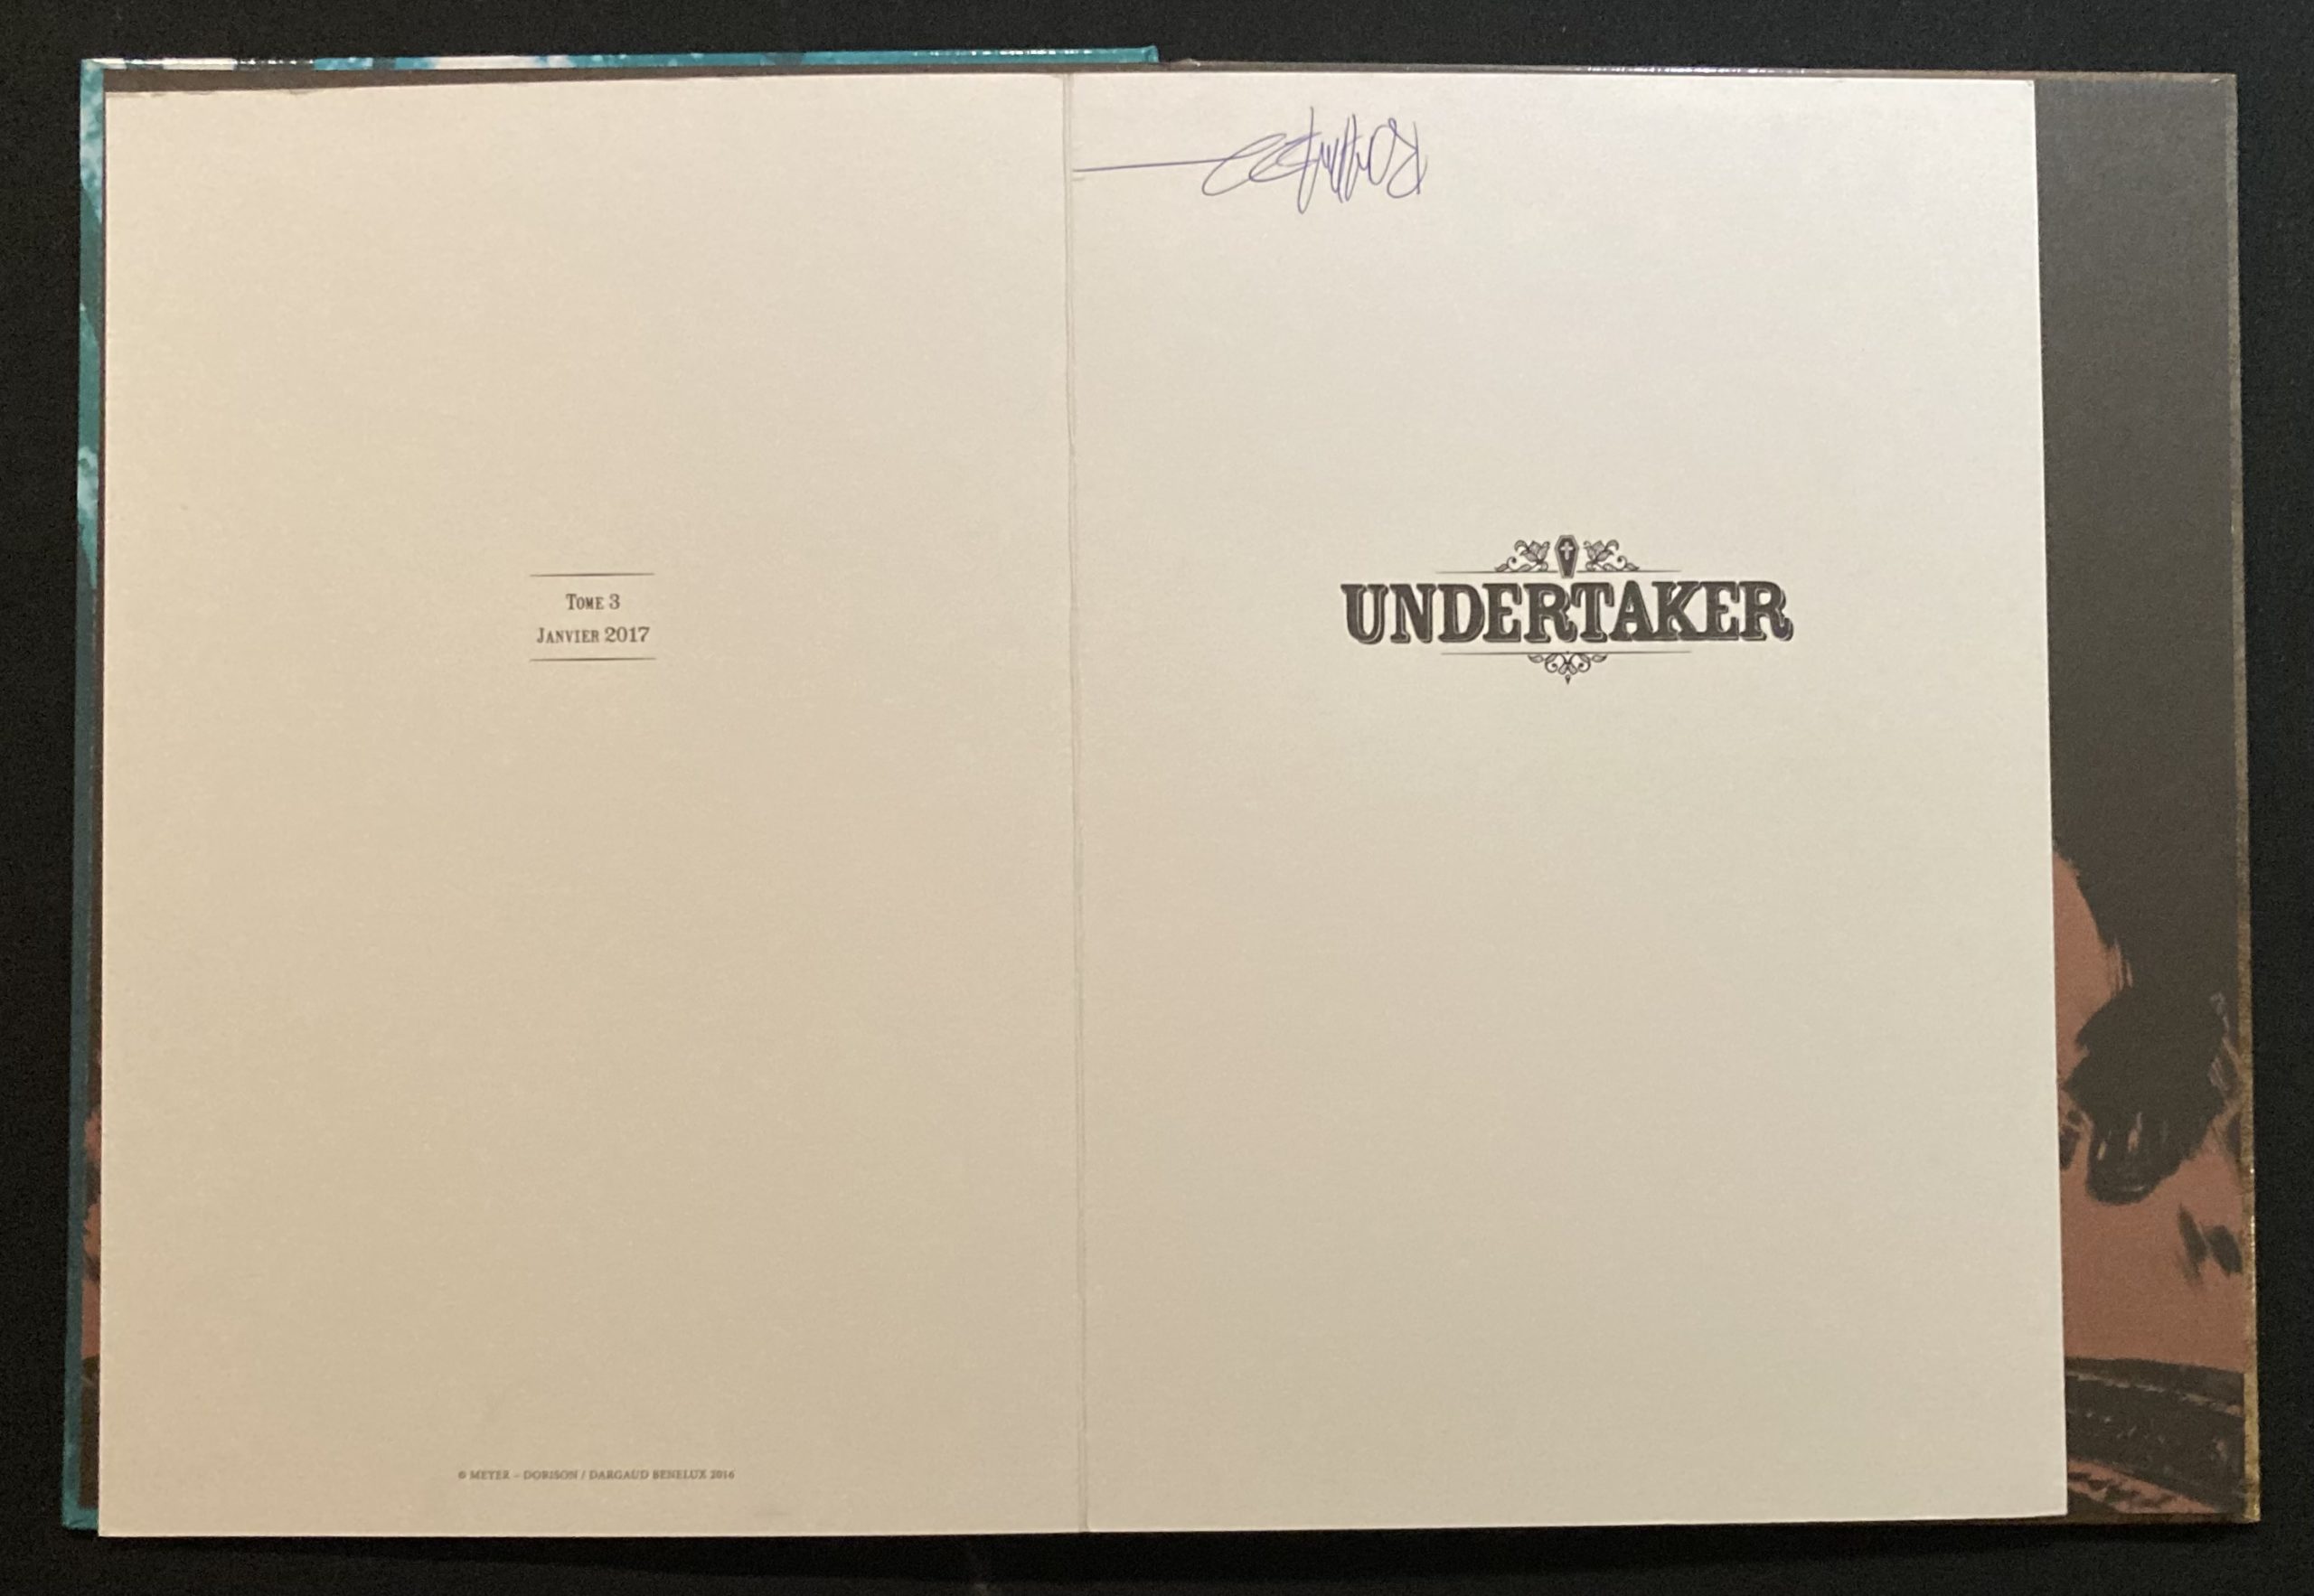 Undertaker - tome 3 - L'Ogre de Sutter Camp (French Edition